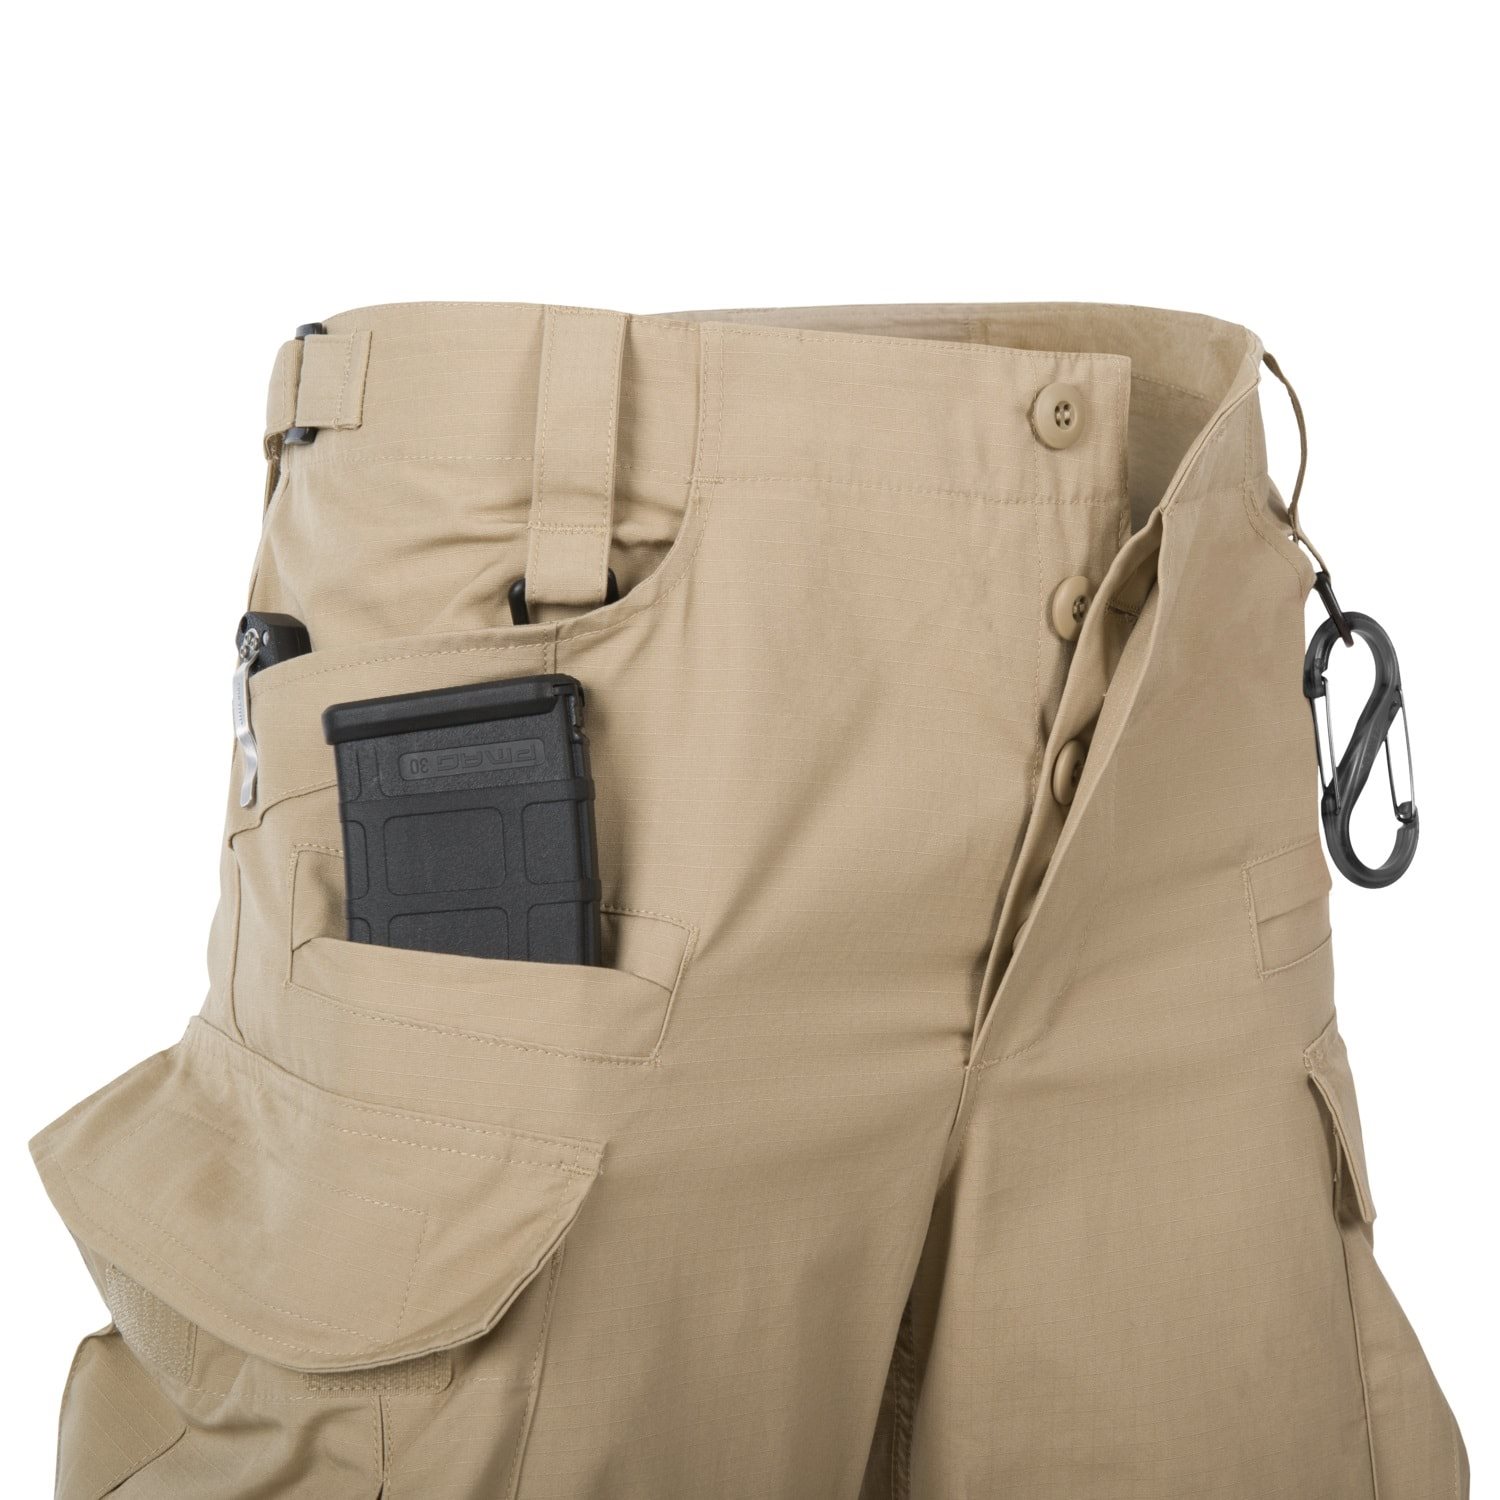 Buy Next Look Men's Skinny Fit Formal Trousers (SMTS00029-G6_Dark Grey_96)  at Amazon.in